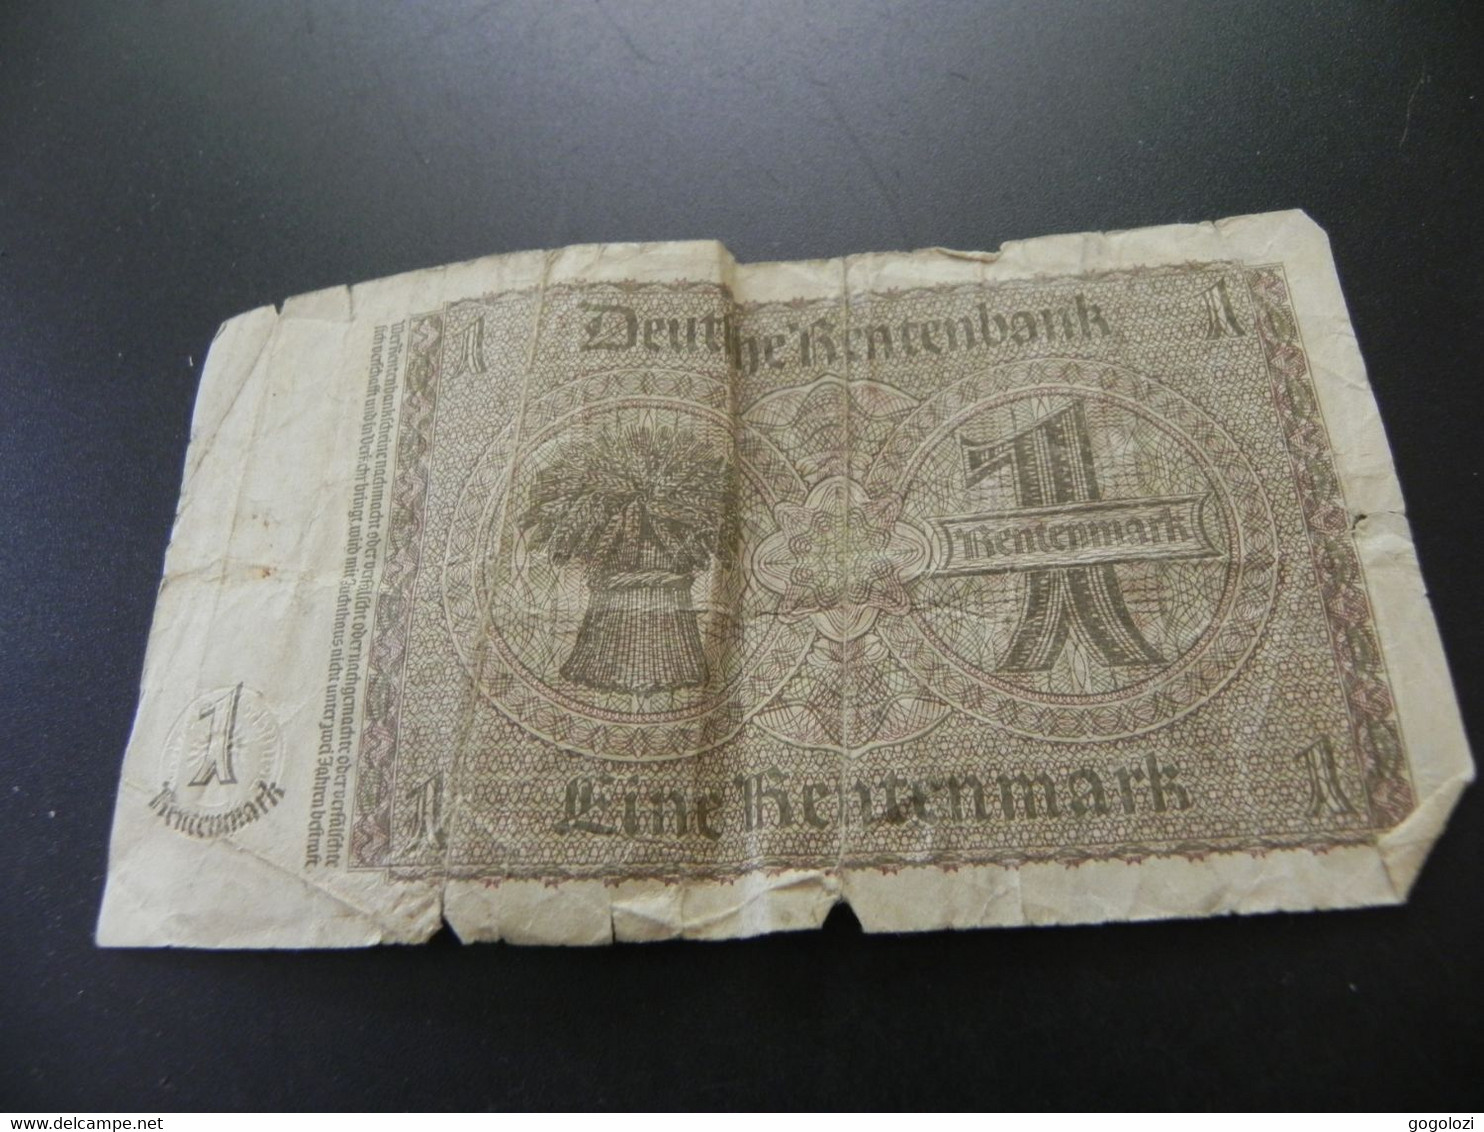 Deutschland 1 Rentenmark 1937 - 1 Rentenmark